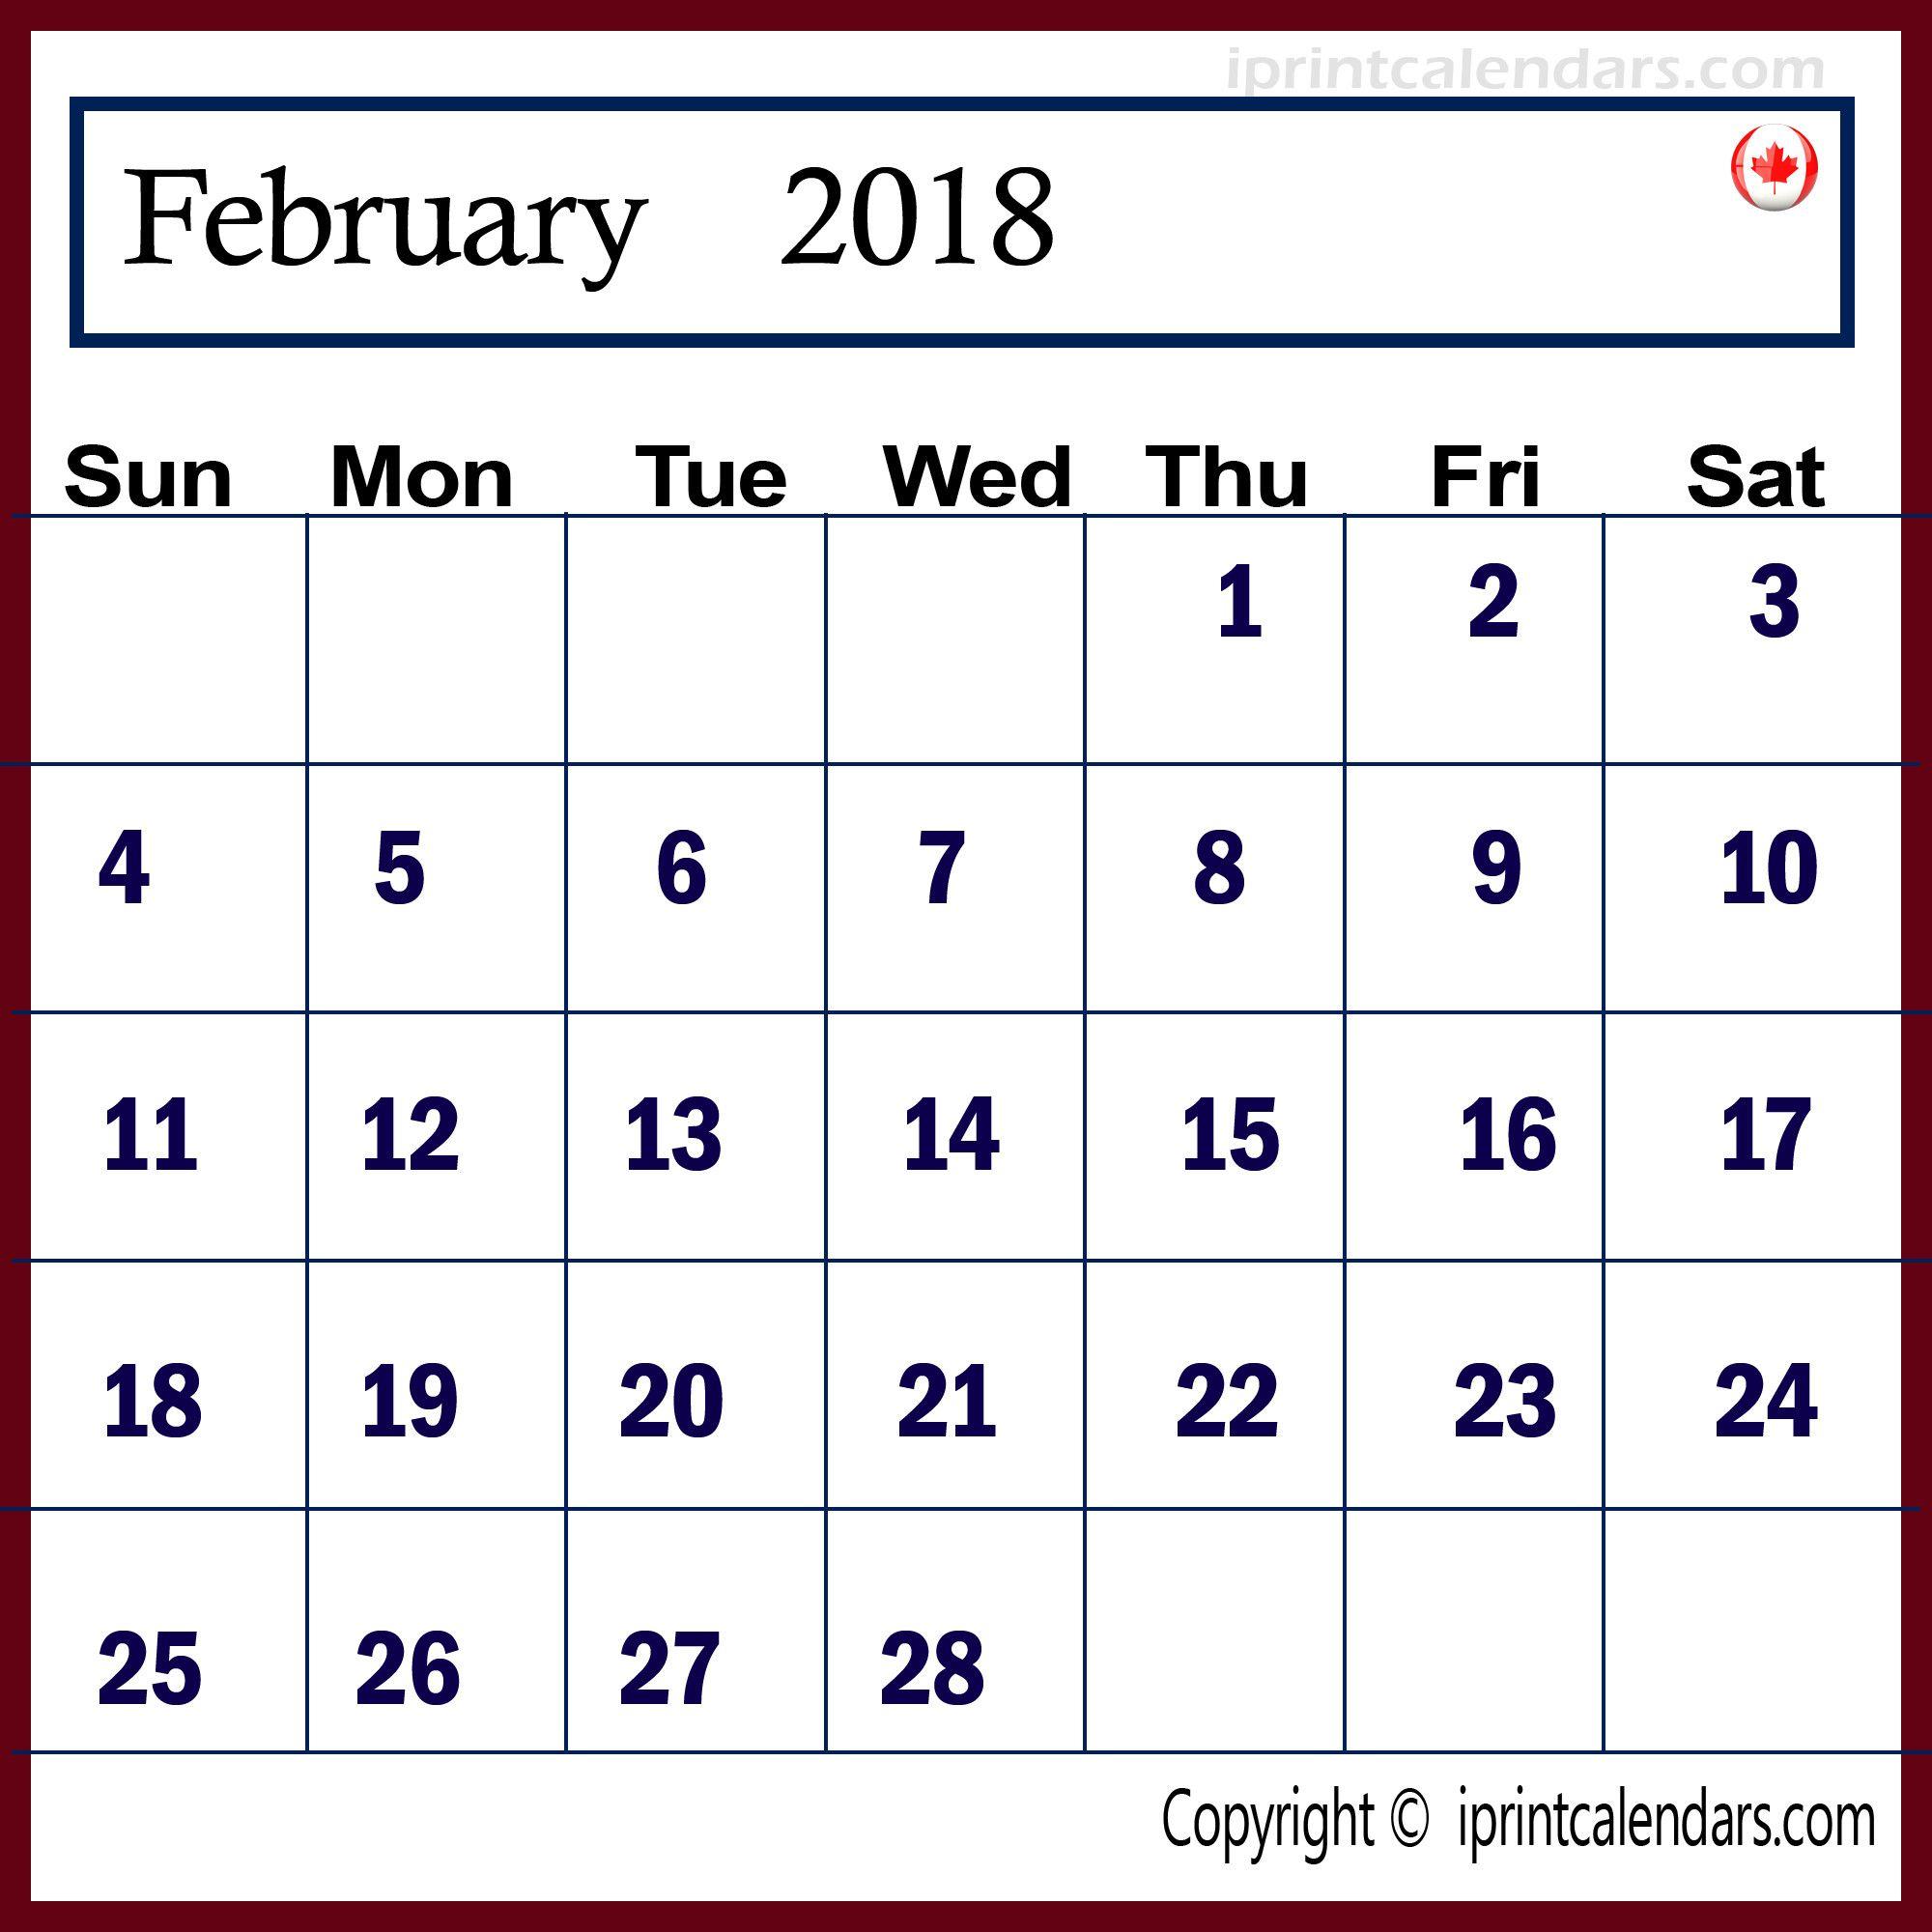 February 2018 Wallpaper Calendar